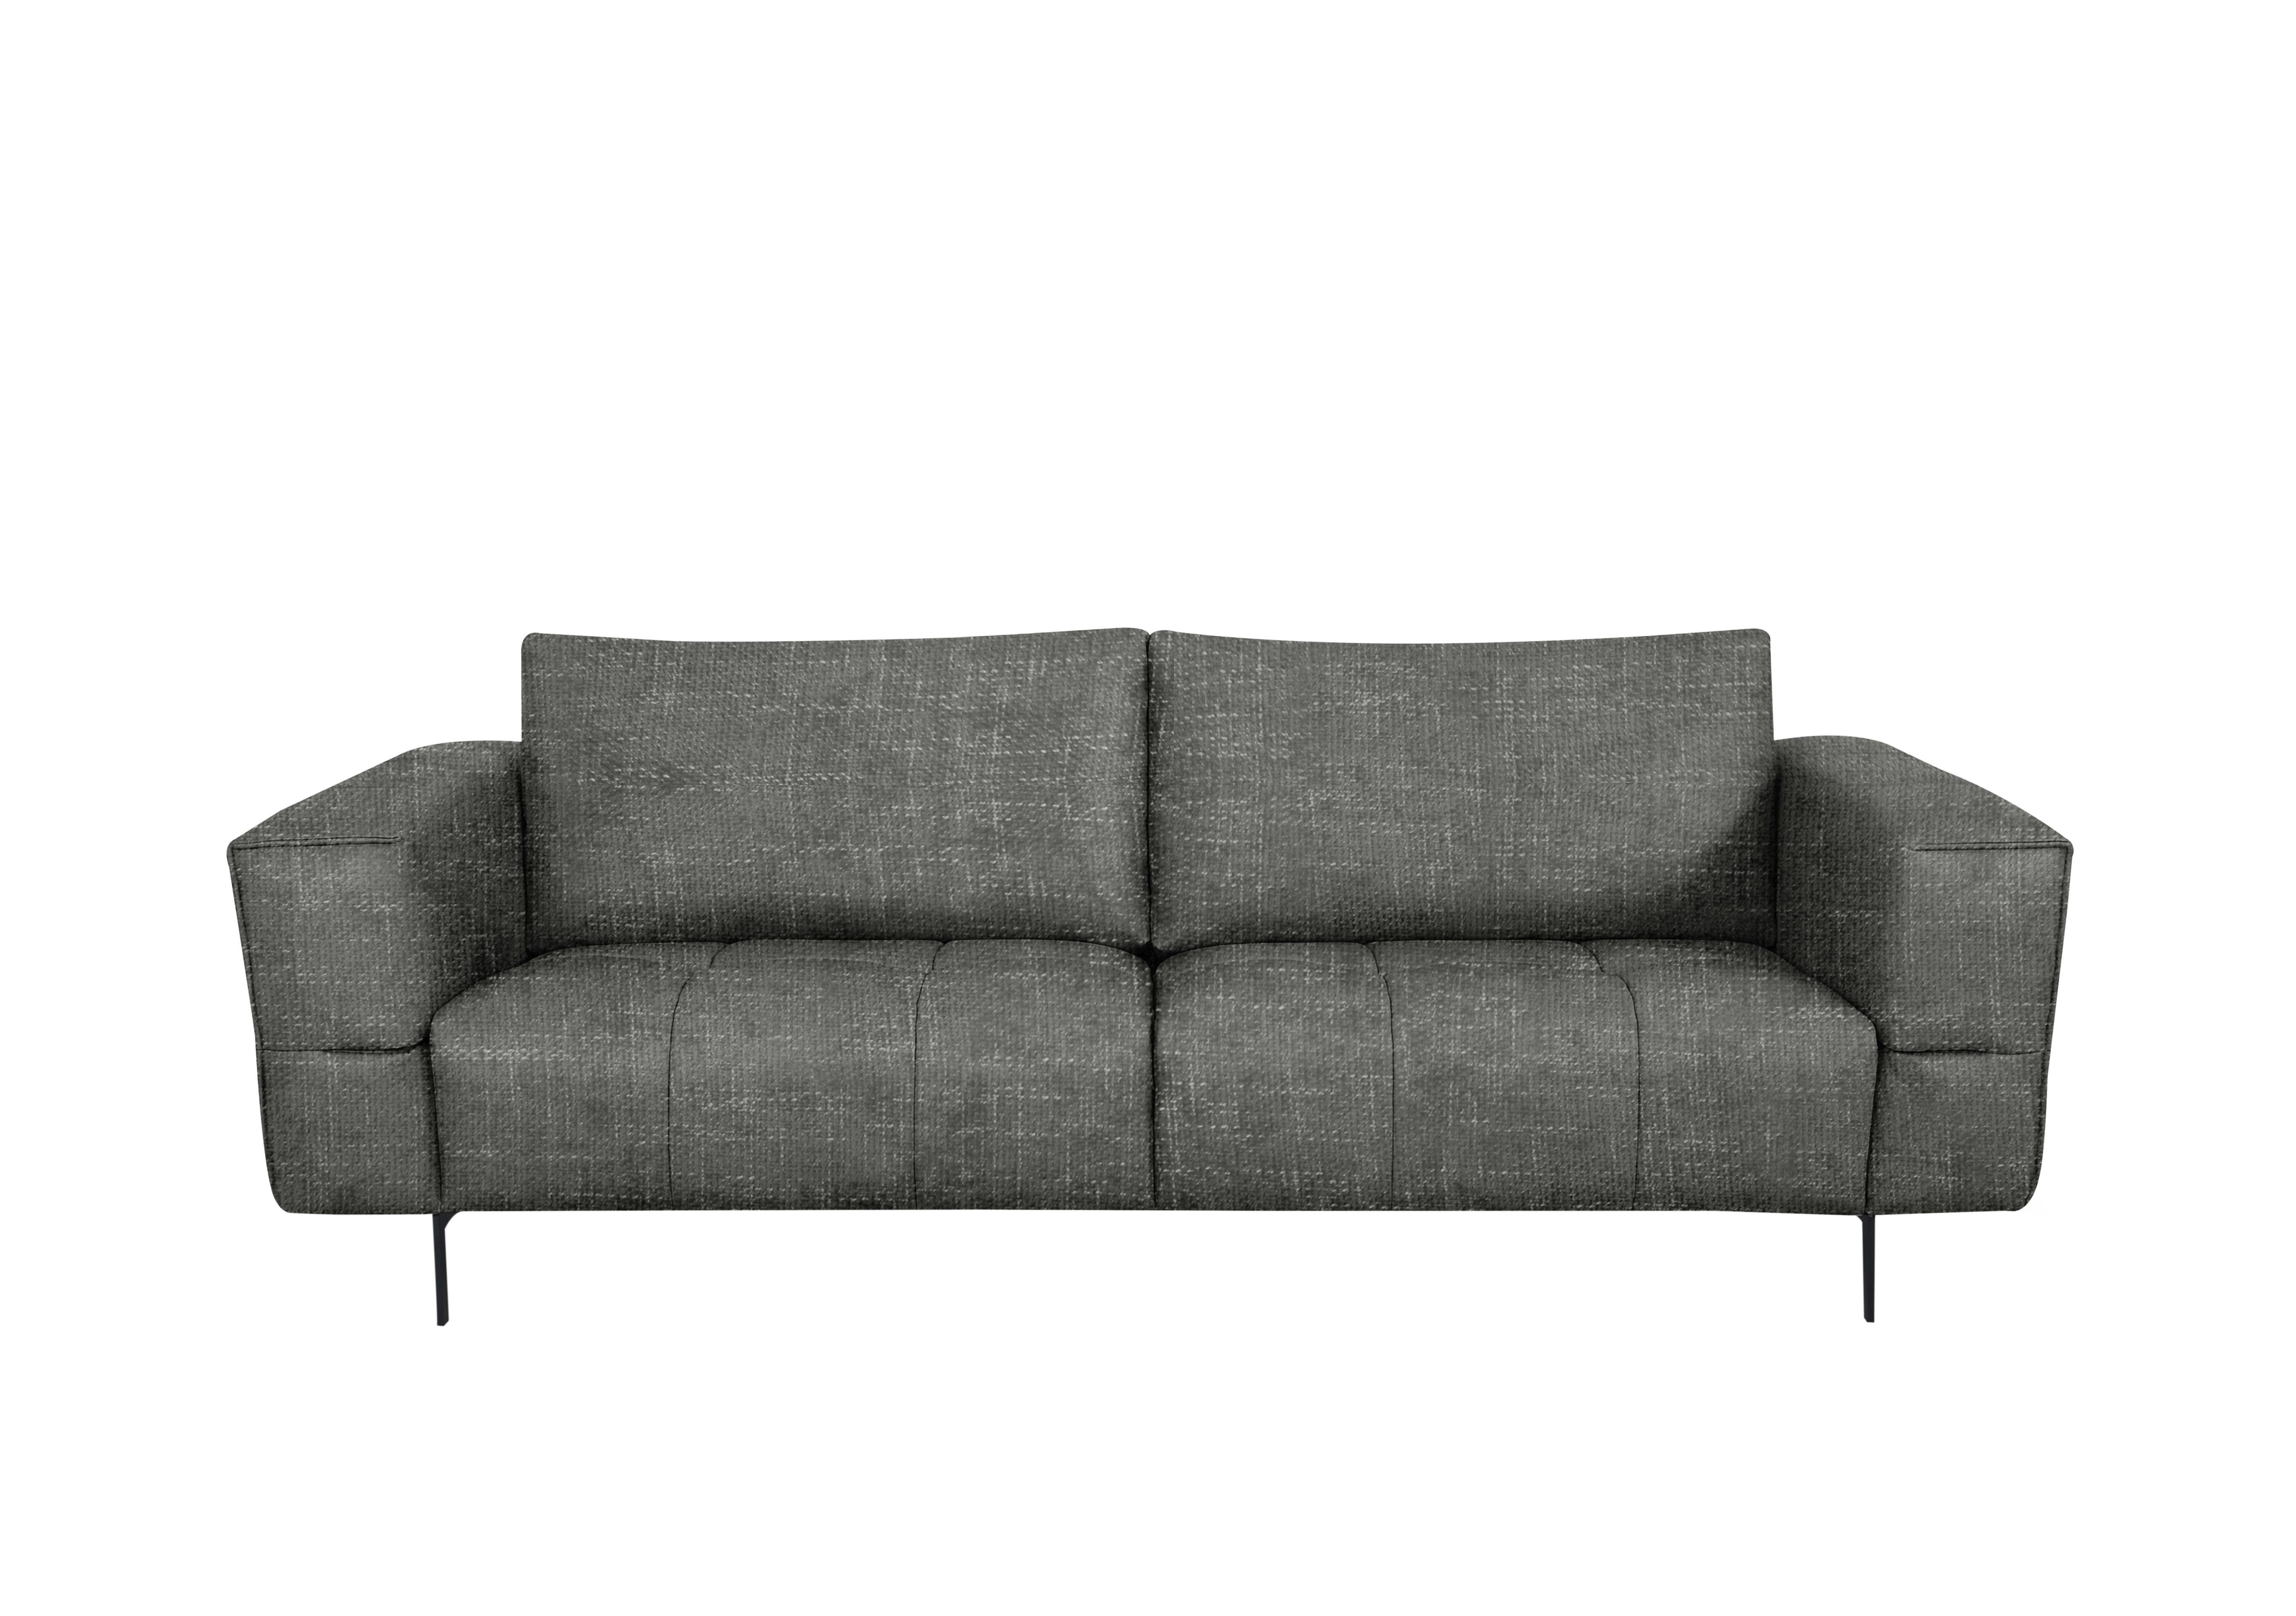 Lawson 3 Seater Fabric Sofa in Fab-Cac-R455 Ash on Furniture Village